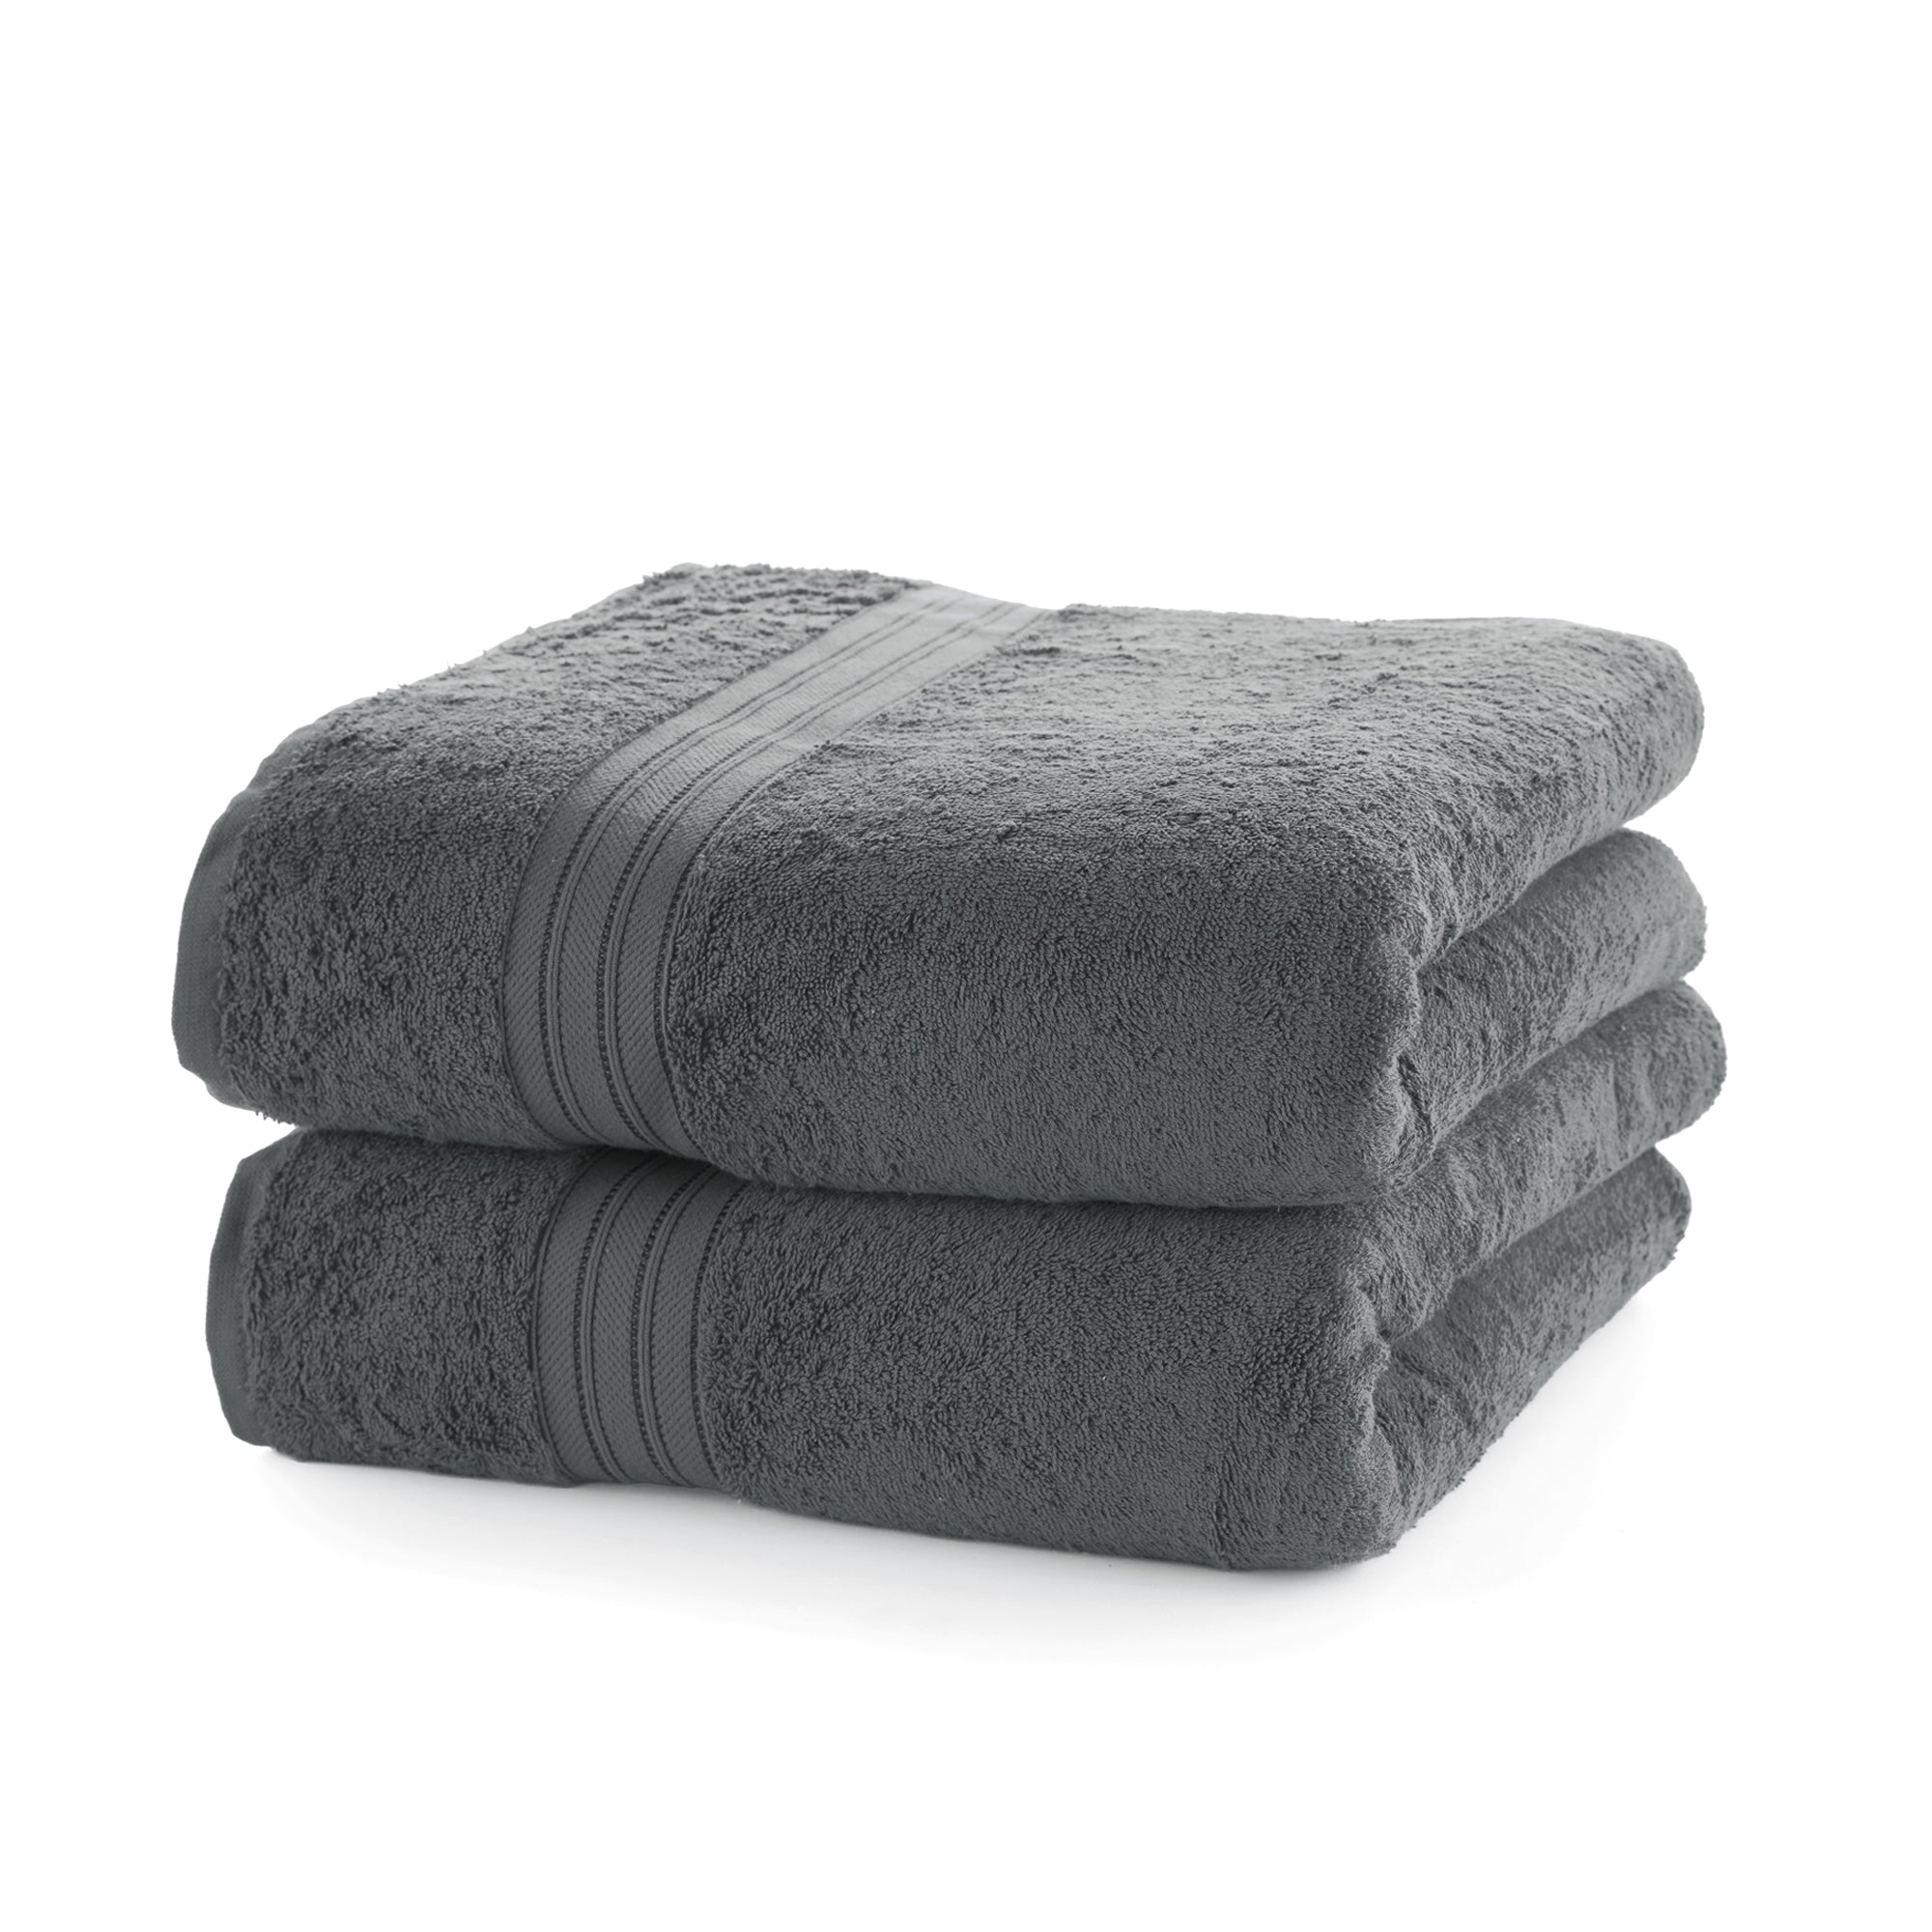 Mellanni Bath Towels 100% Cotton 27 inchx54 inch, 2 Pack, Gray, Size: 27 x 54